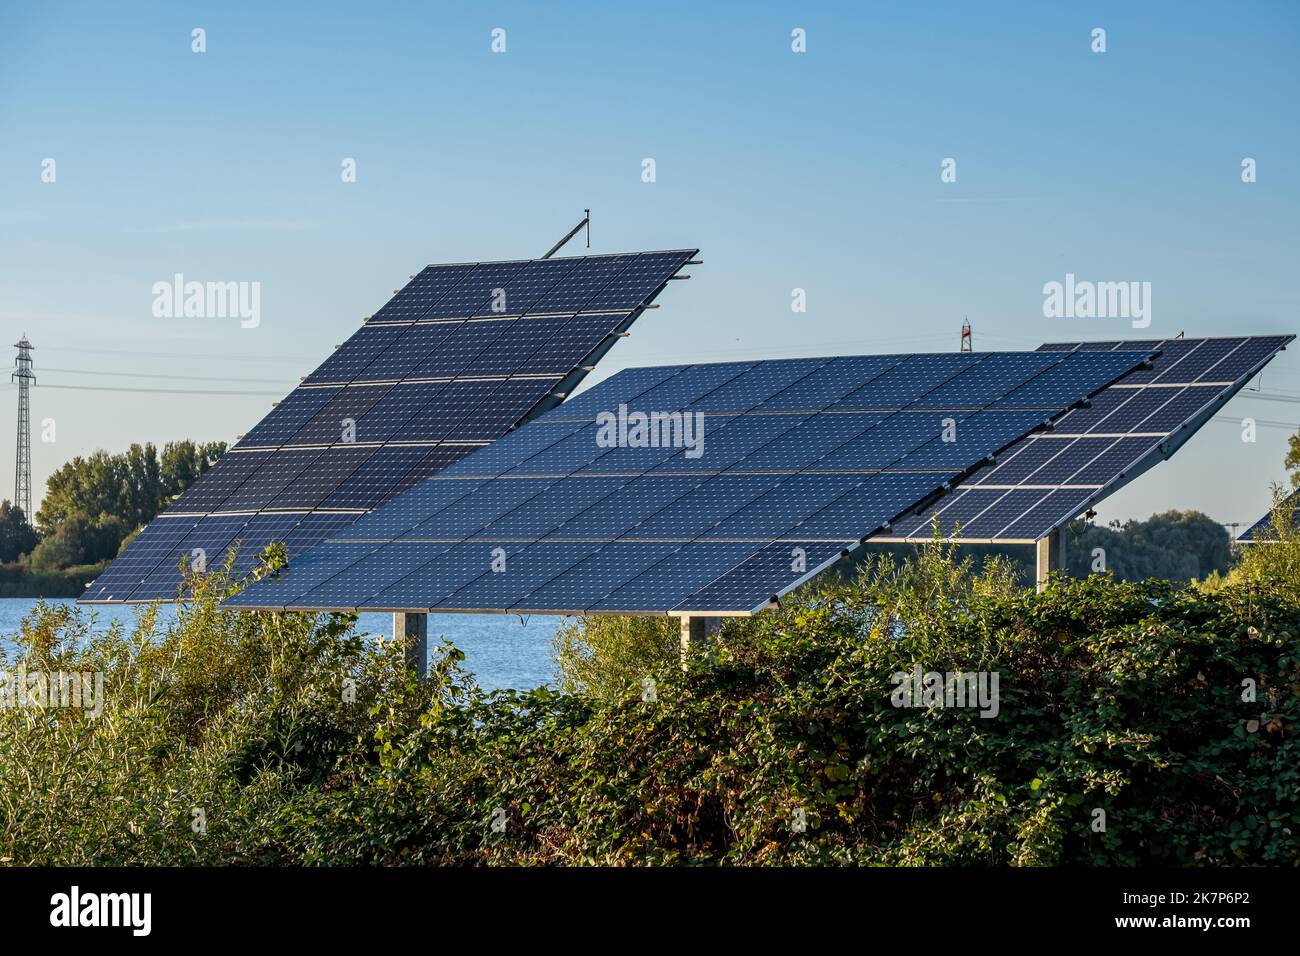 multiple solar panels against a blue sky Stock Photo